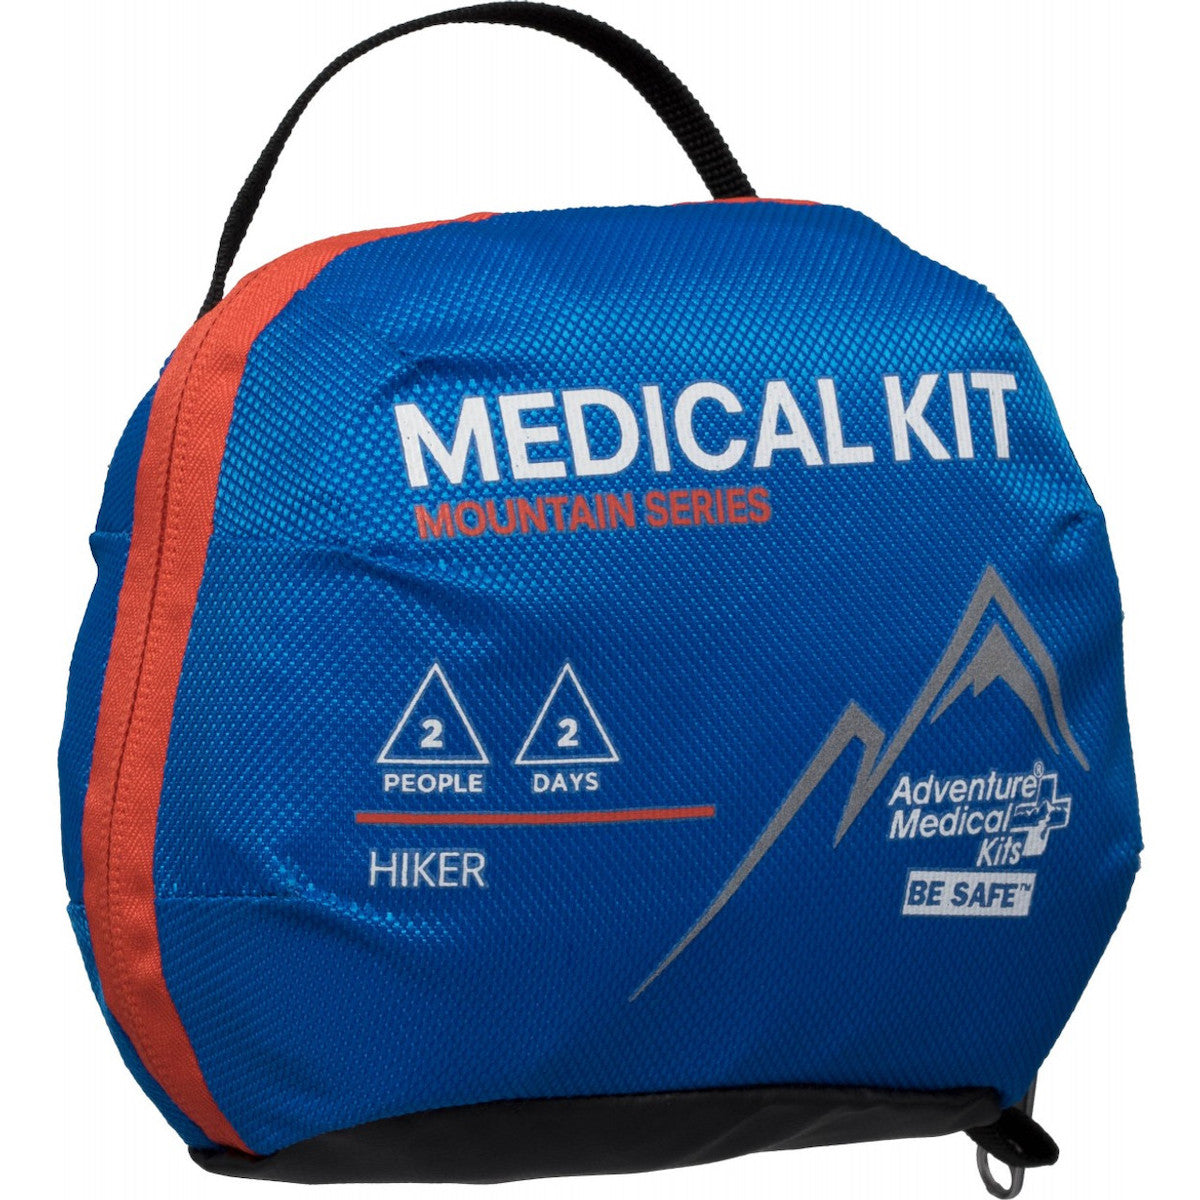 Adventure Medical Kit Mountain Series - Hiker First Aid Kit